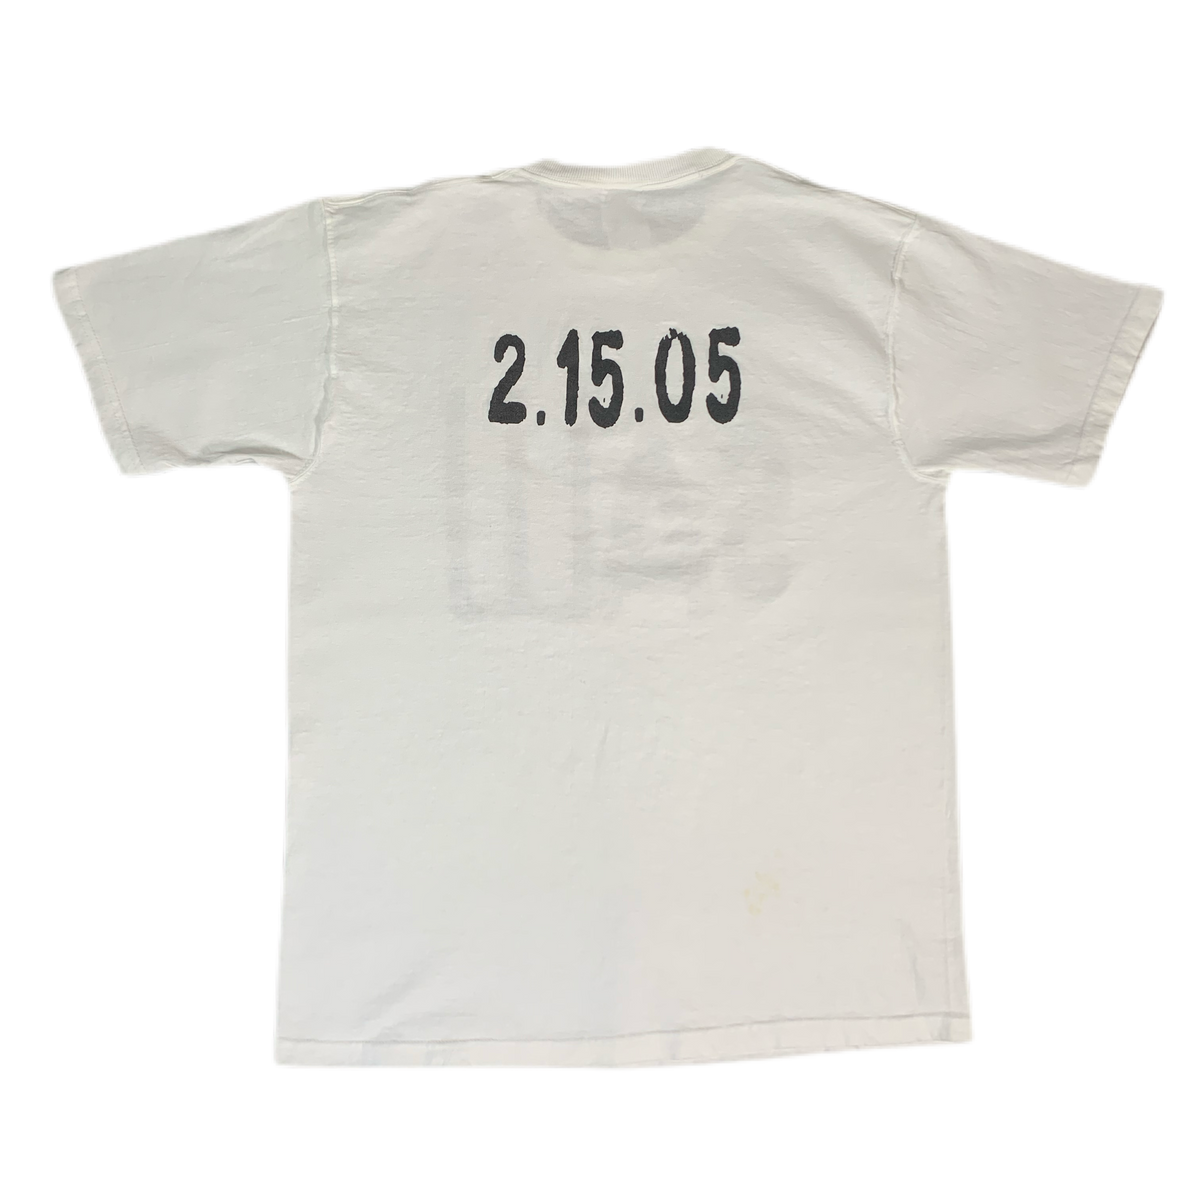 Vintage SAW “2.15.05” T-Shirt